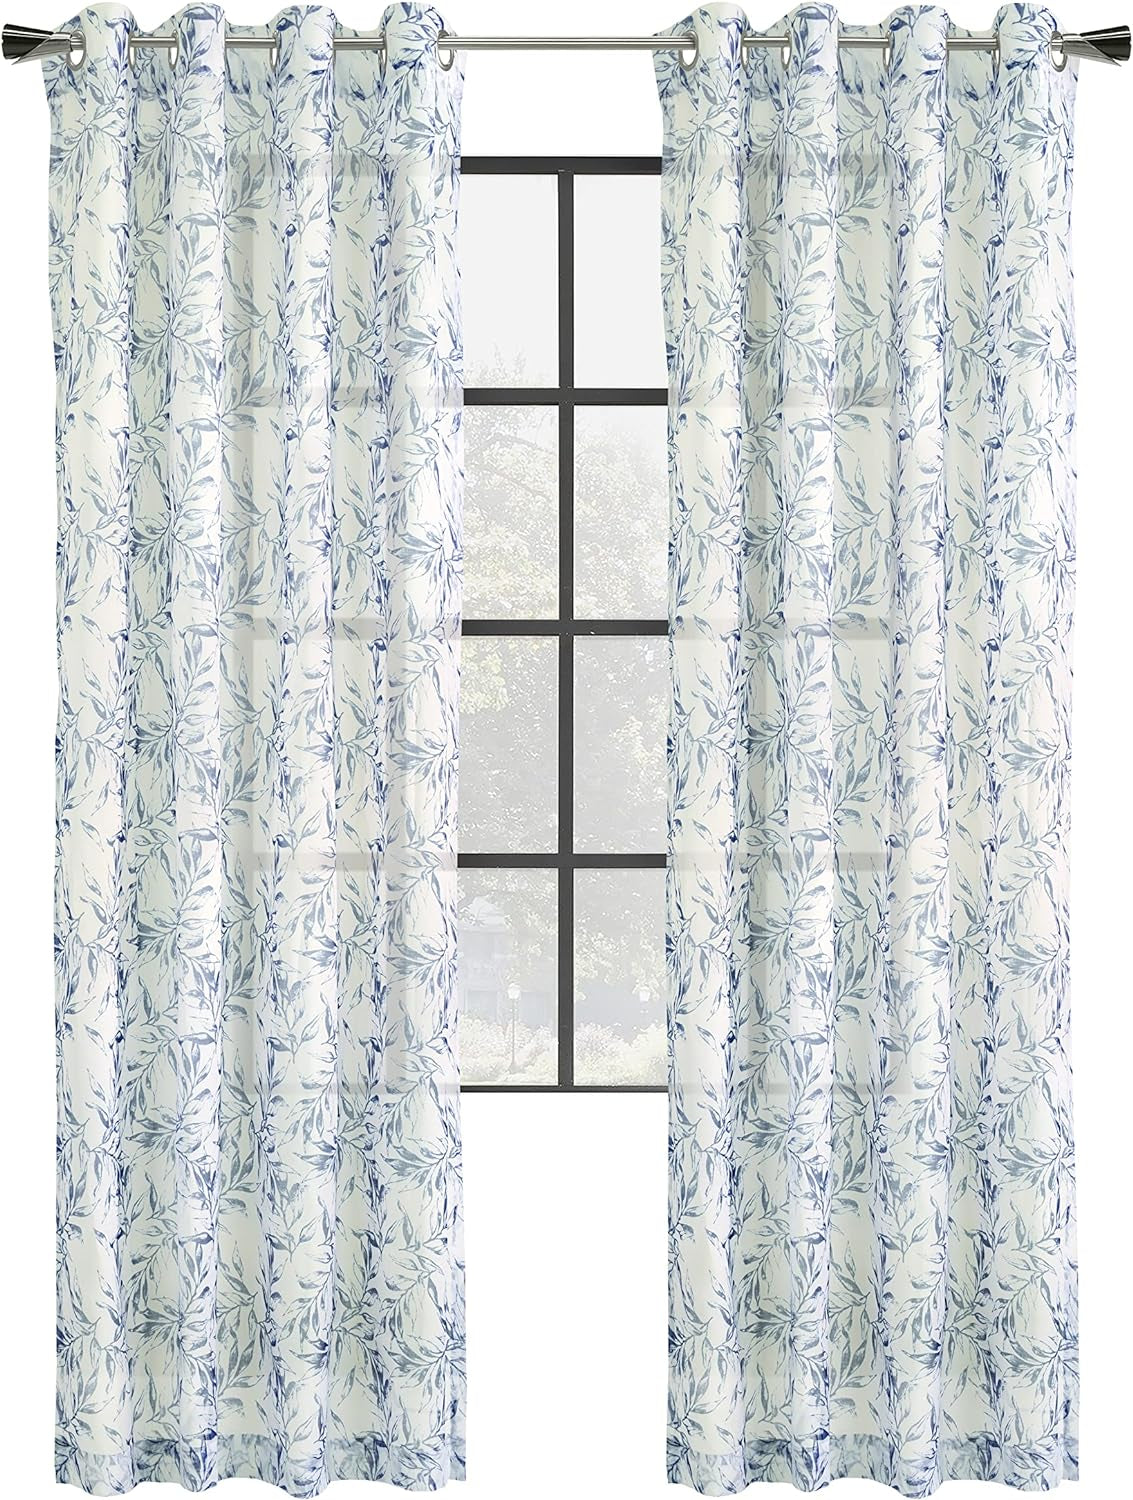 Jennifer Sheer Botanical Print Grommet Curtain Panel 52" X 95" in Indigo